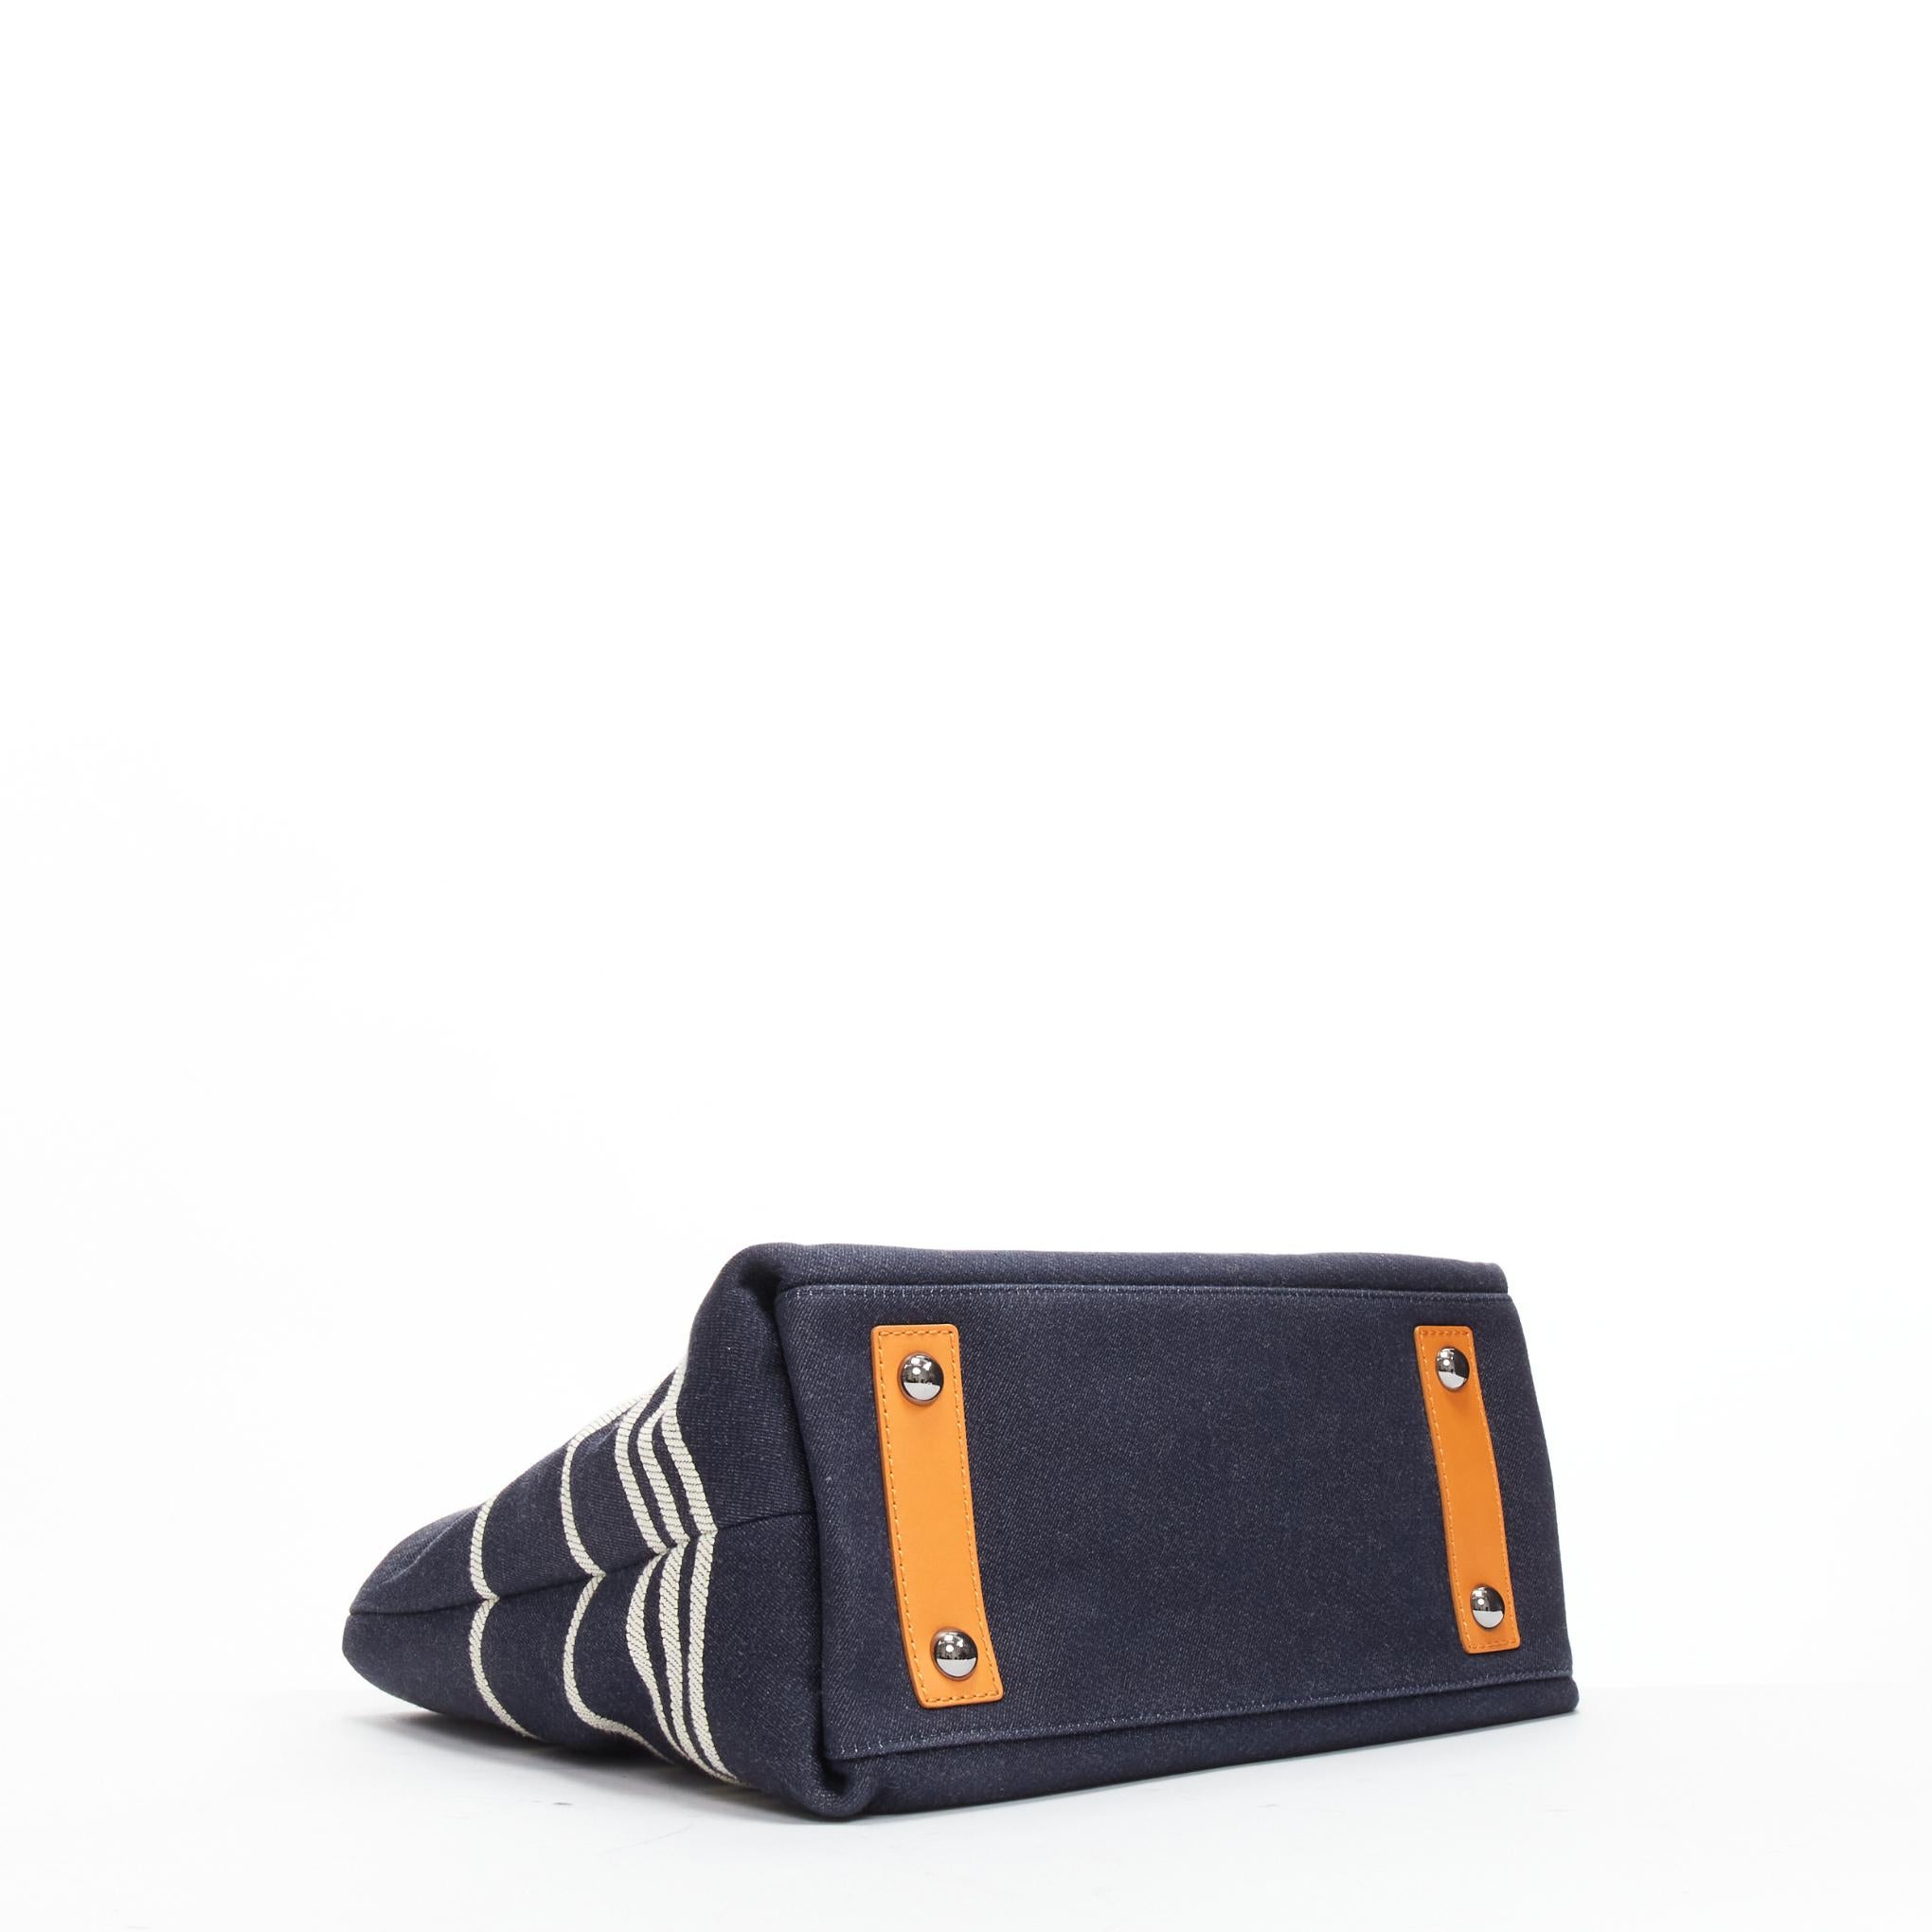 CHANEL Large Denim CC Shopping Tote logo stripes dark blue brown strap bag 2